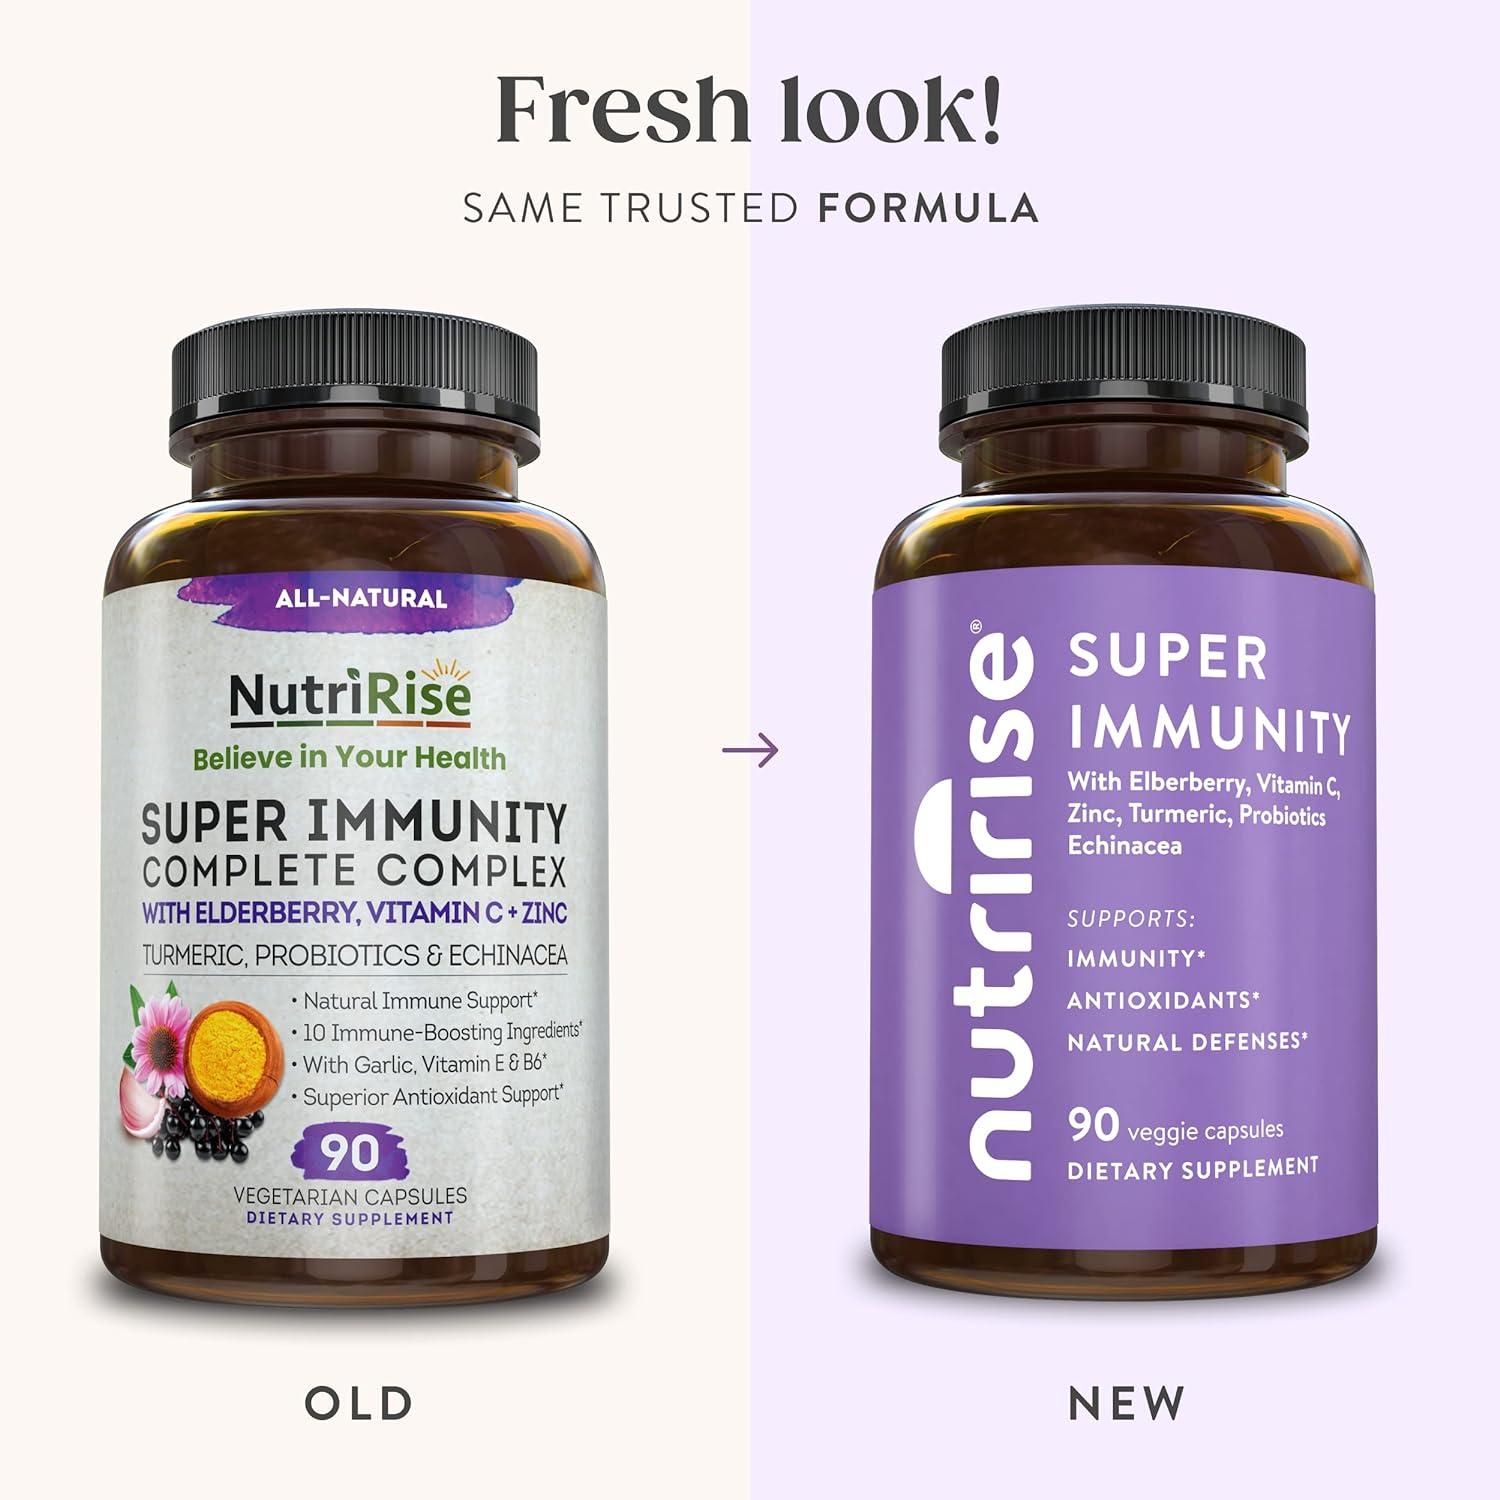 Nutrilite Triple Booster set untuk Kuatkan Imun, Health & Nutrition, Health  Supplements, Vitamins & Supplements on Carousell